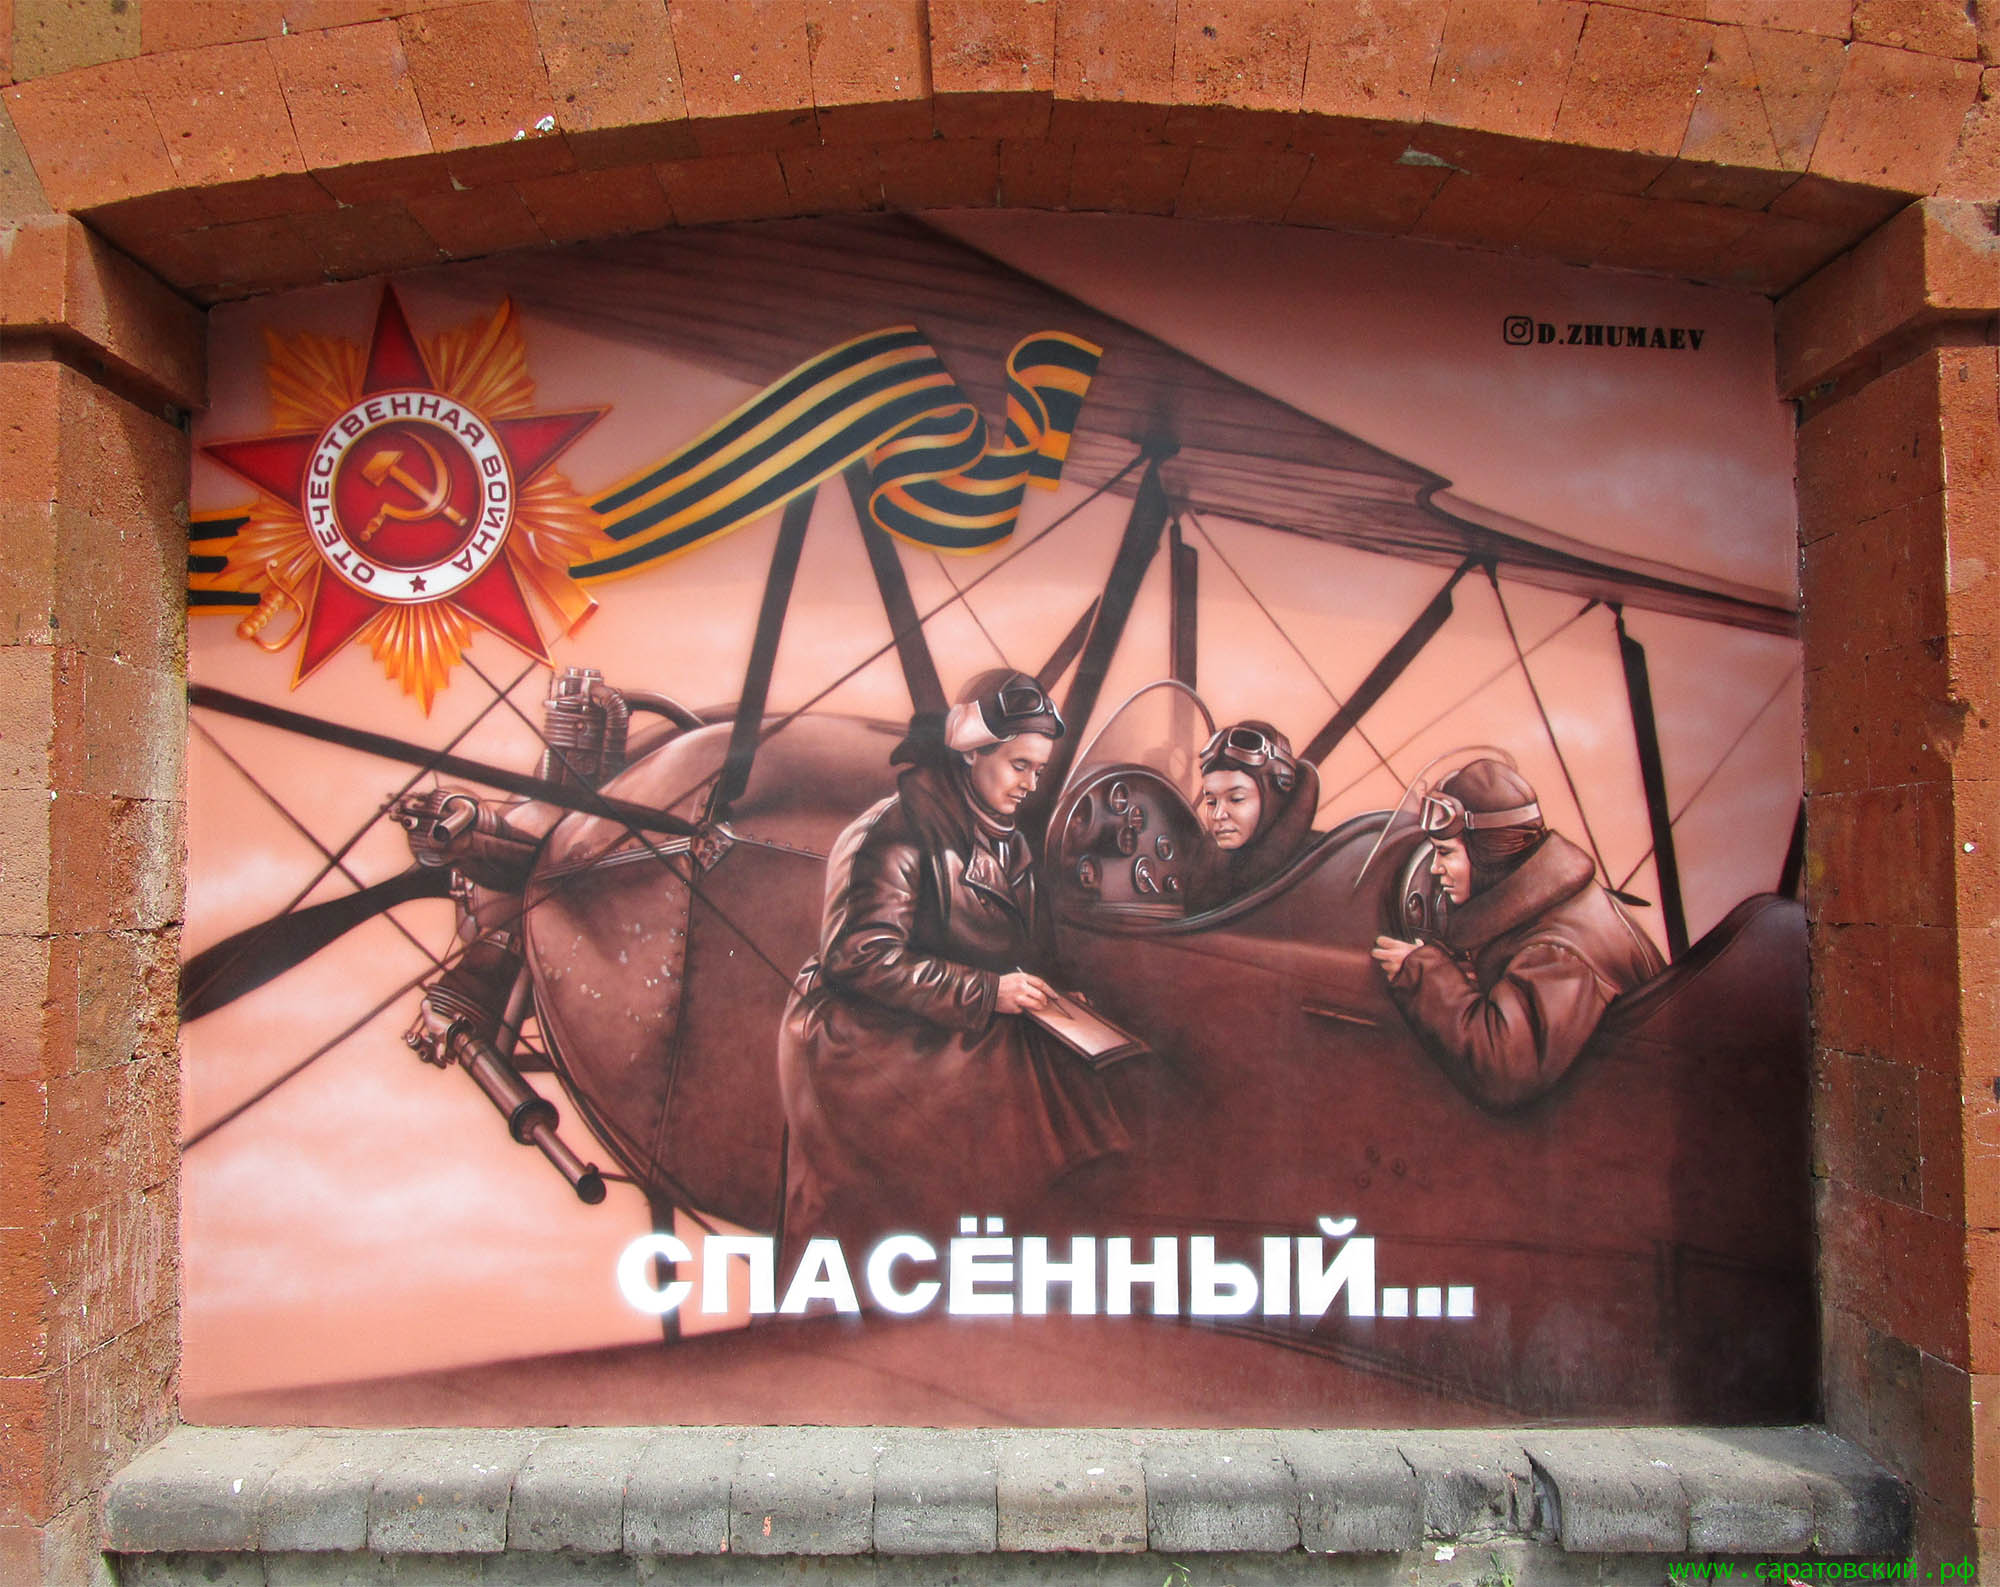 Saratov embankment graffiti: Saratov female pilots during the Great Patriotic War of 1941-1945